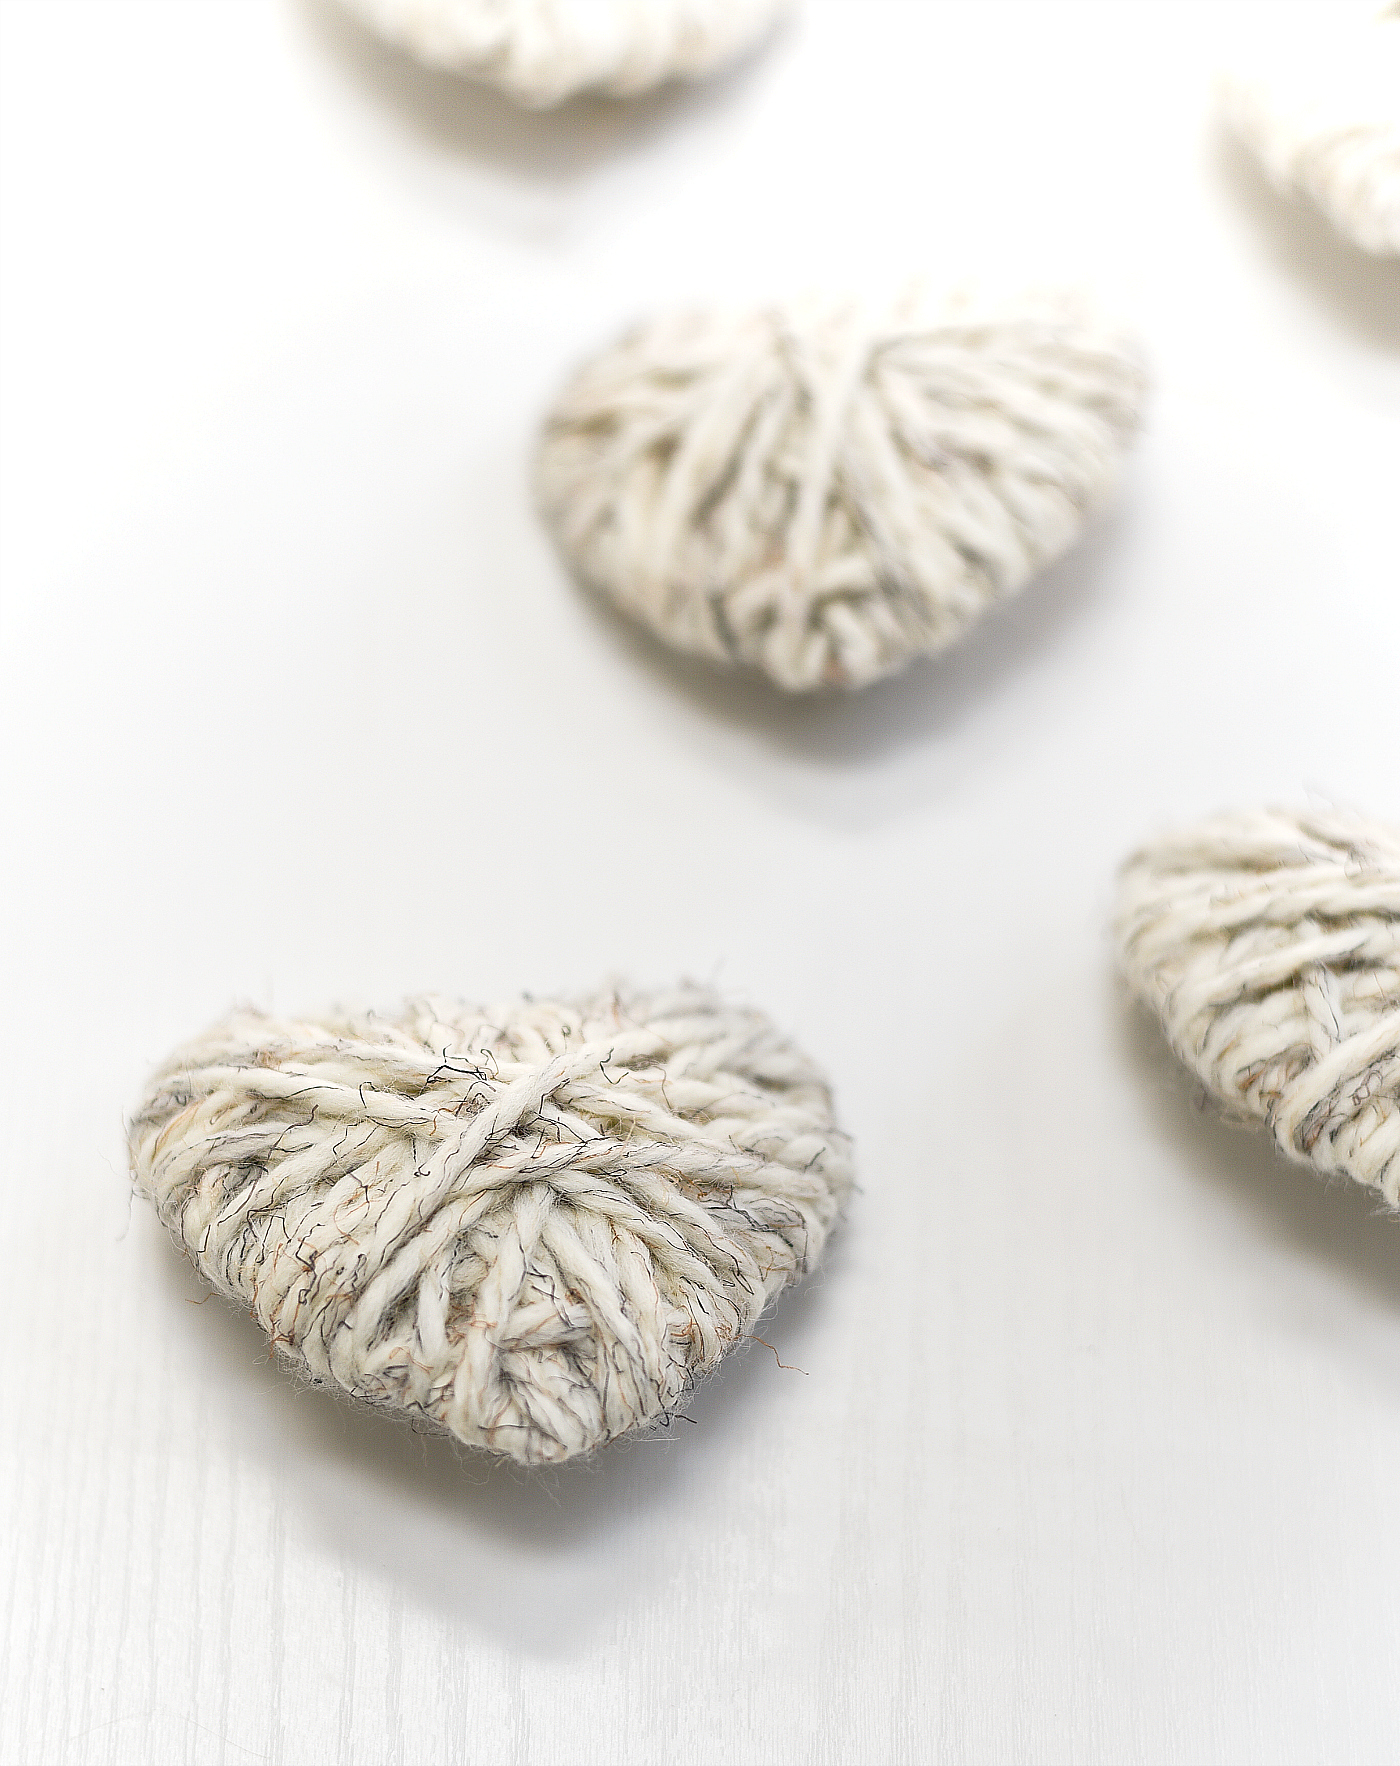 Yarn Wrapped Hearts - Valentine Day Craft Ideas